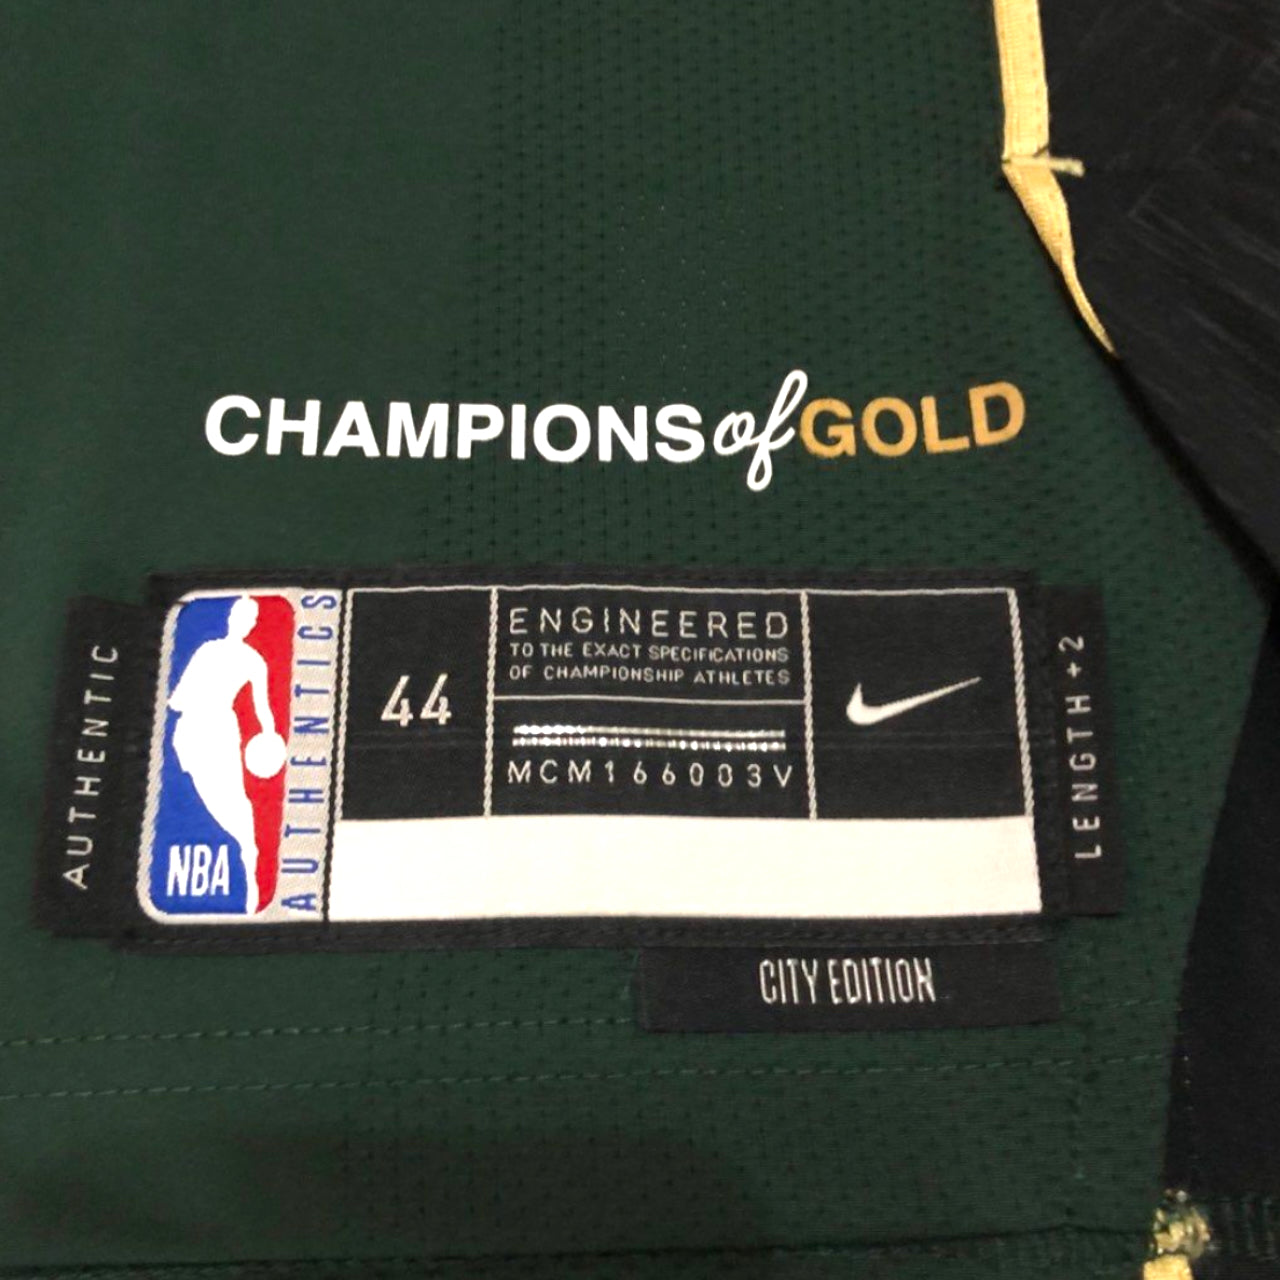 Jayson Tatum Boston Celtics 2022-2023 City Edition Nike Authentic Jersey - Green/Gold